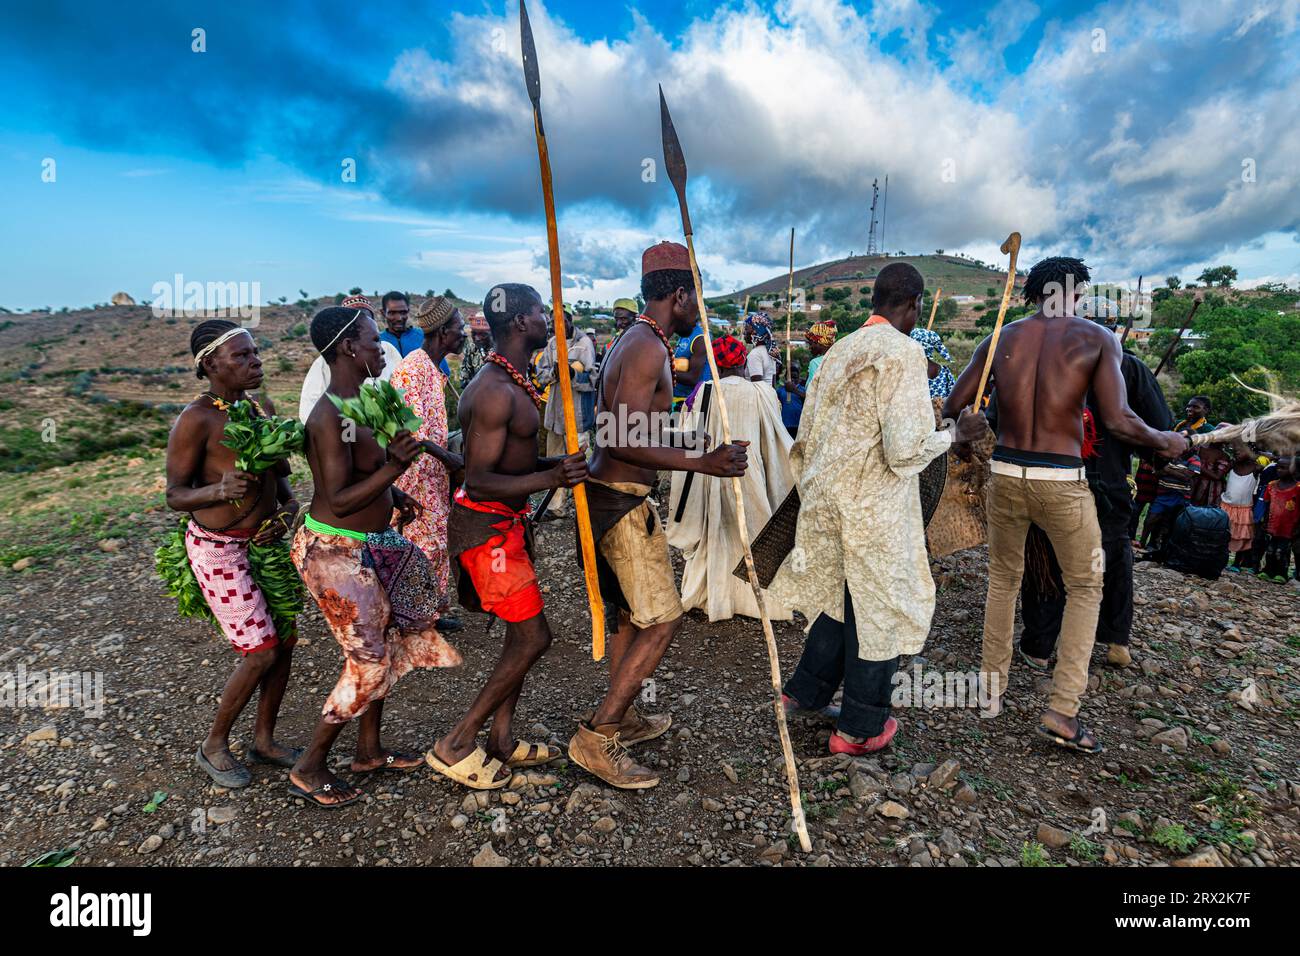 Popolo tribale Kapsiki che pratica una danza tradizionale, Rhumsiki, Mandara Mountains, far North province, Camerun, Africa Foto Stock